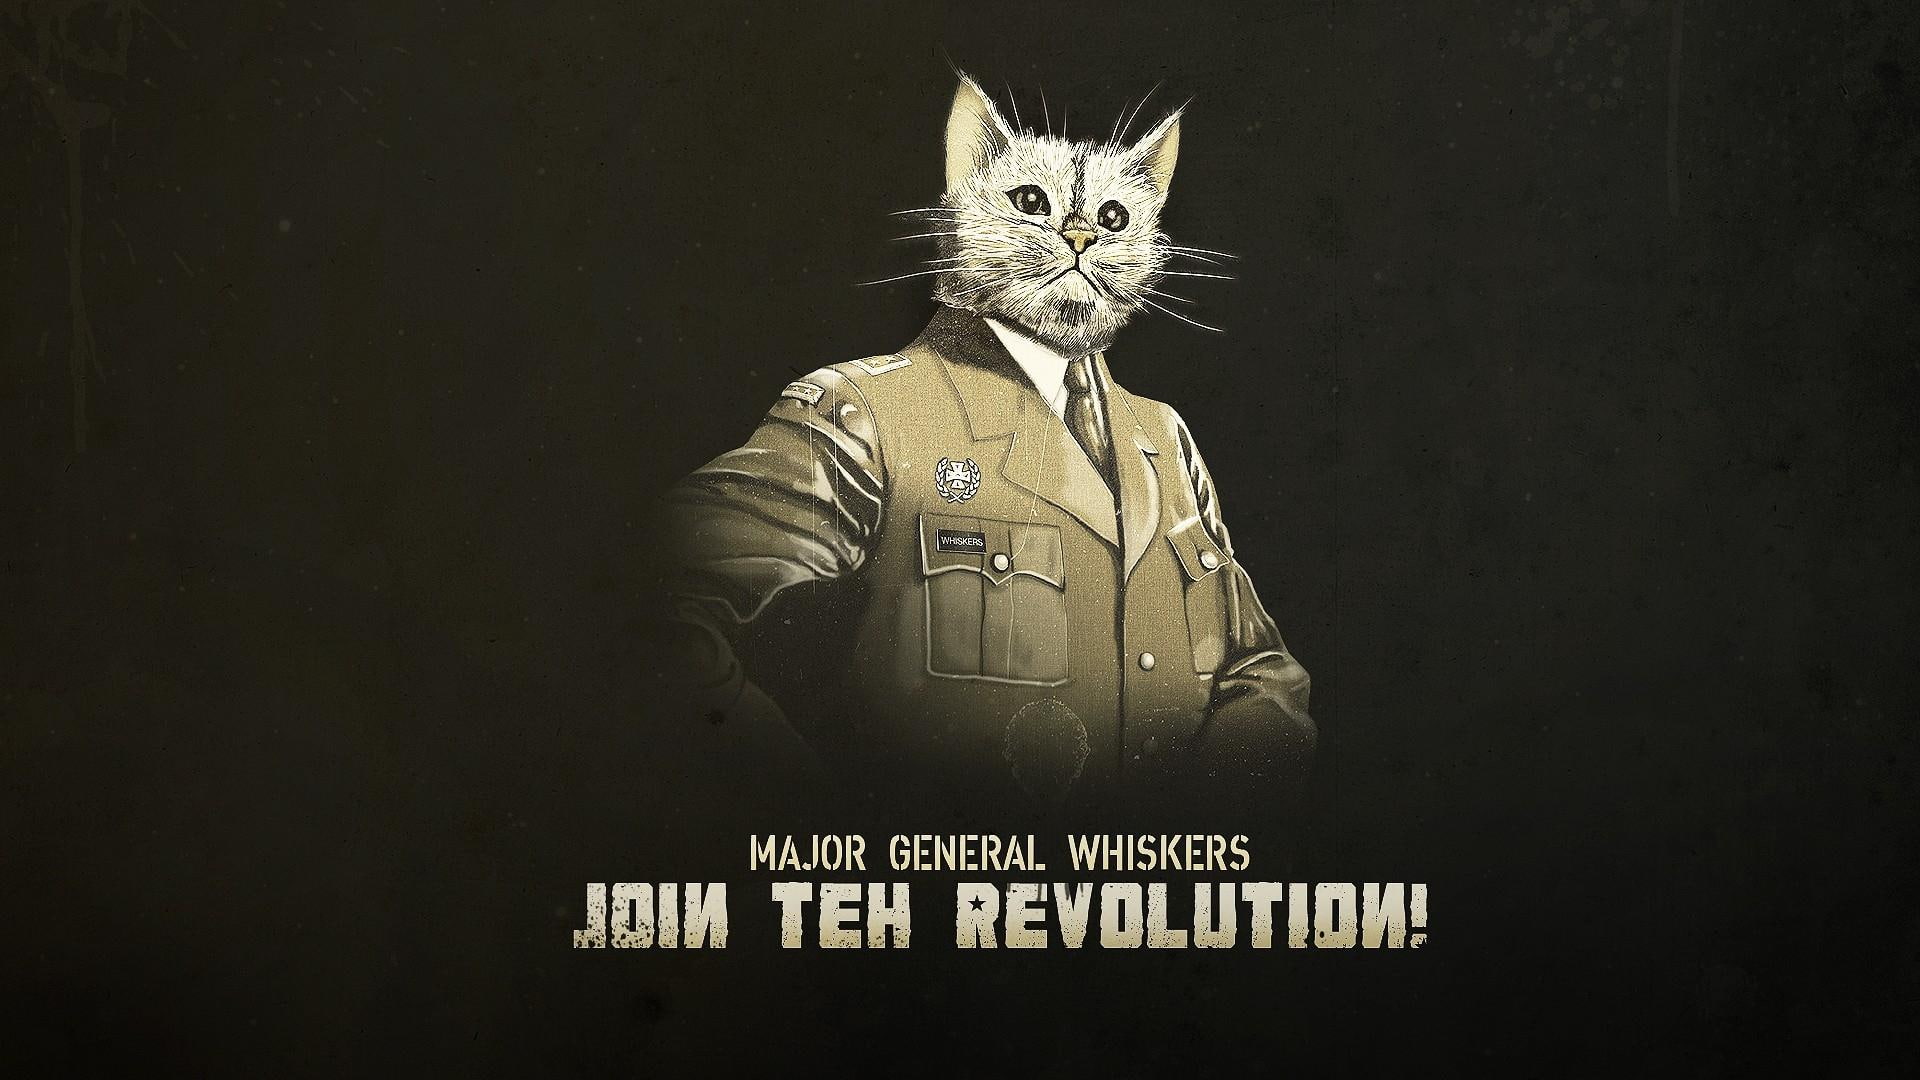 Animals Cats Humor Funny Uniform Statement Whiskers Kitten Military Revolution Magazine